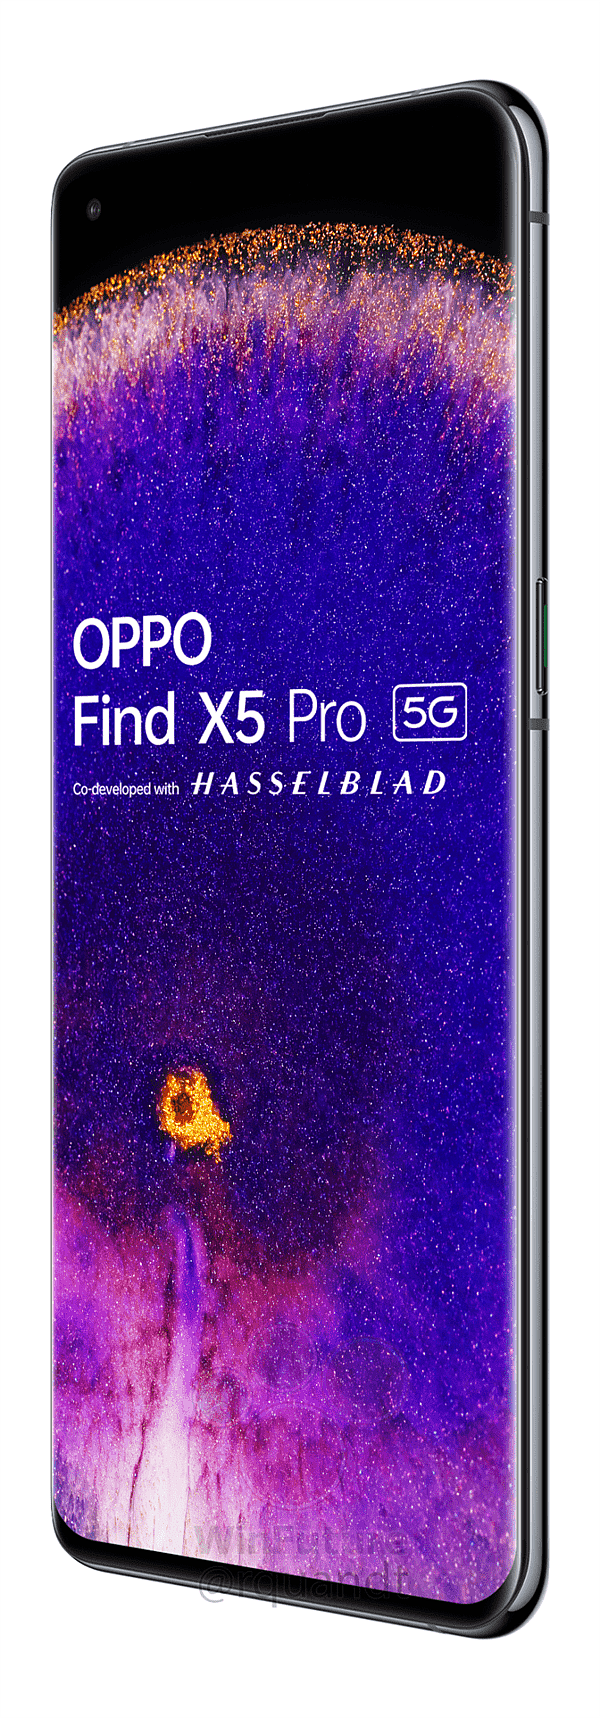 Find X5 Pro渲染图首曝：OPPO MariSilicon X自研芯片加持 - 1